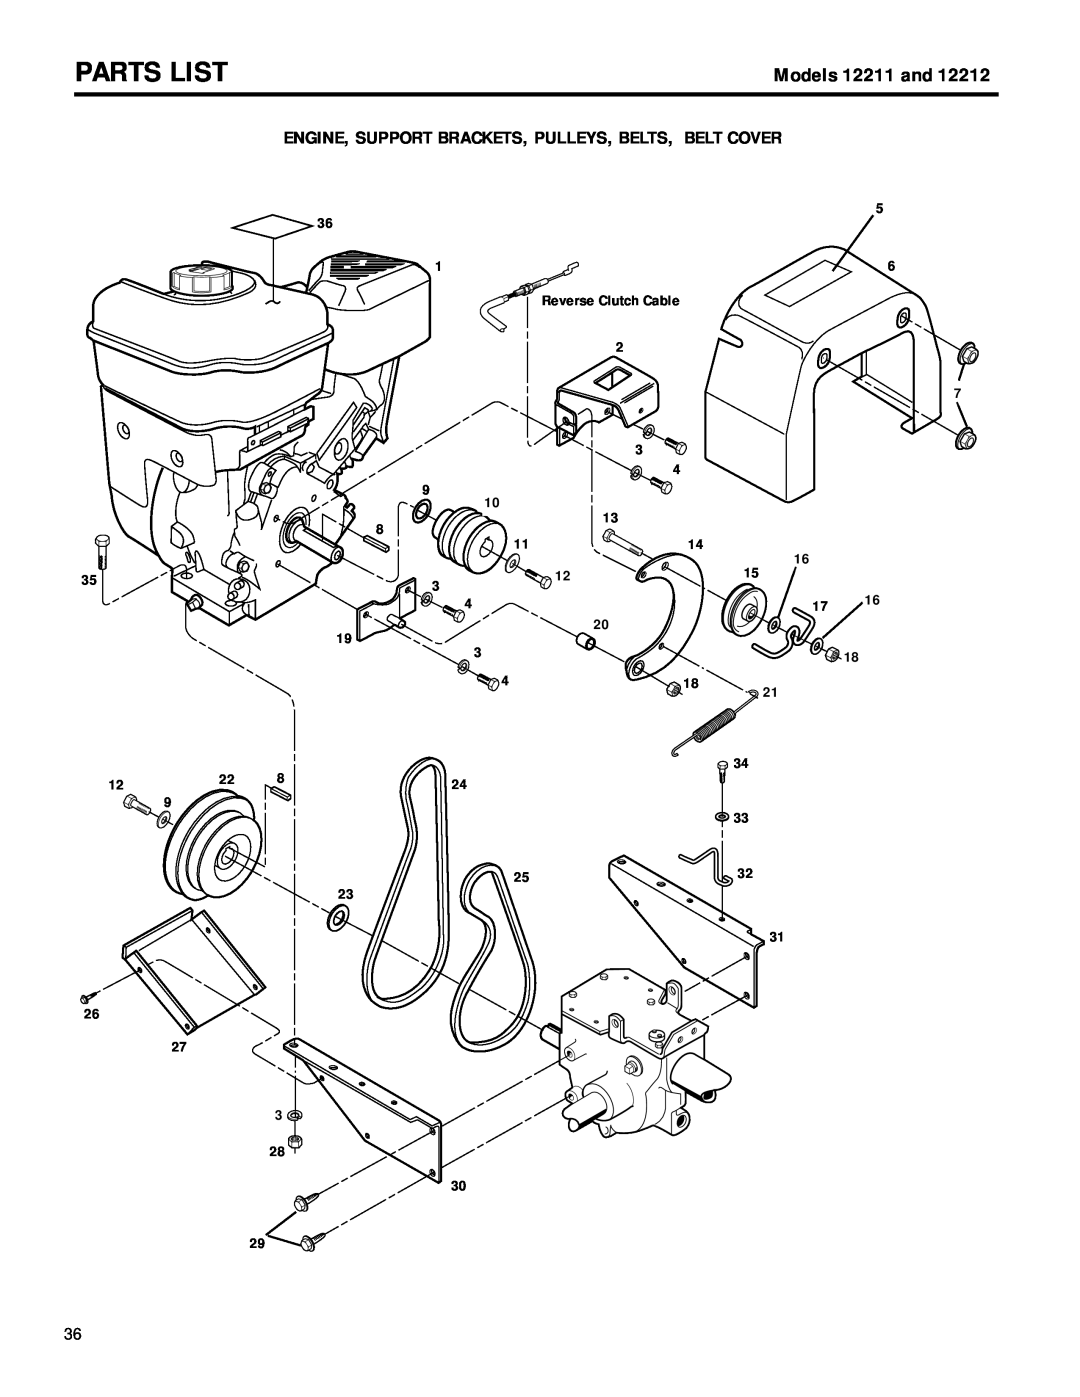 Troy-Bilt 12212 Engine, Support Brackets, Pulleys, Belts, Belt Cover, Parts List, Models 12211 and, Reverse Clutch Cable 